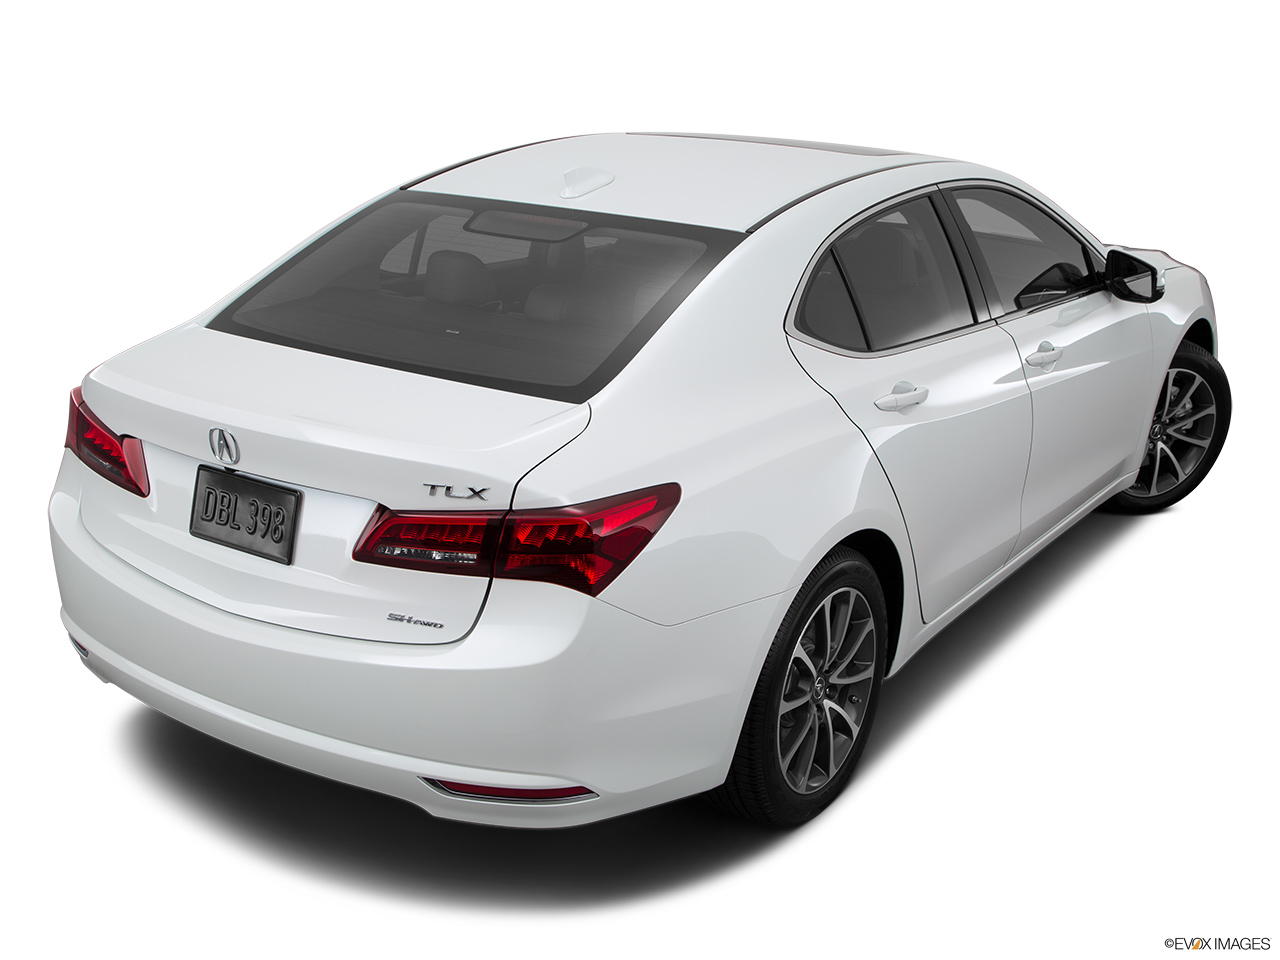 2015 Acura TLX 3.5 V-6 9-AT SH-AWD Rear 3/4 angle view. 